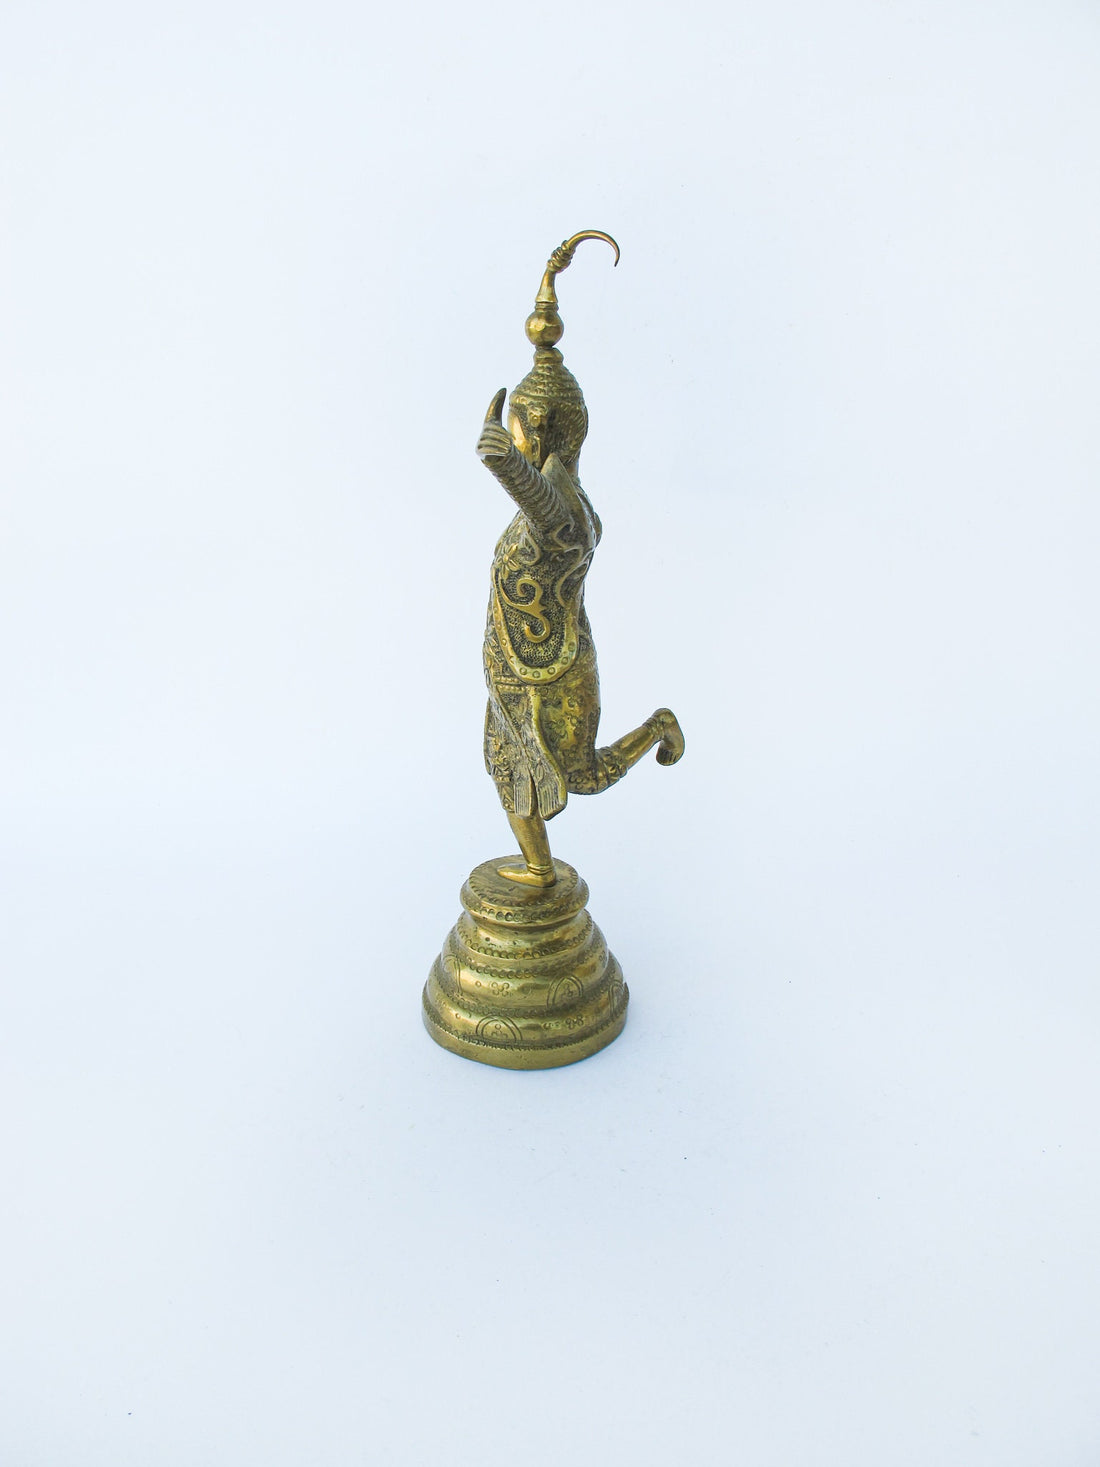 Brass Thai Dancer Statue Figure